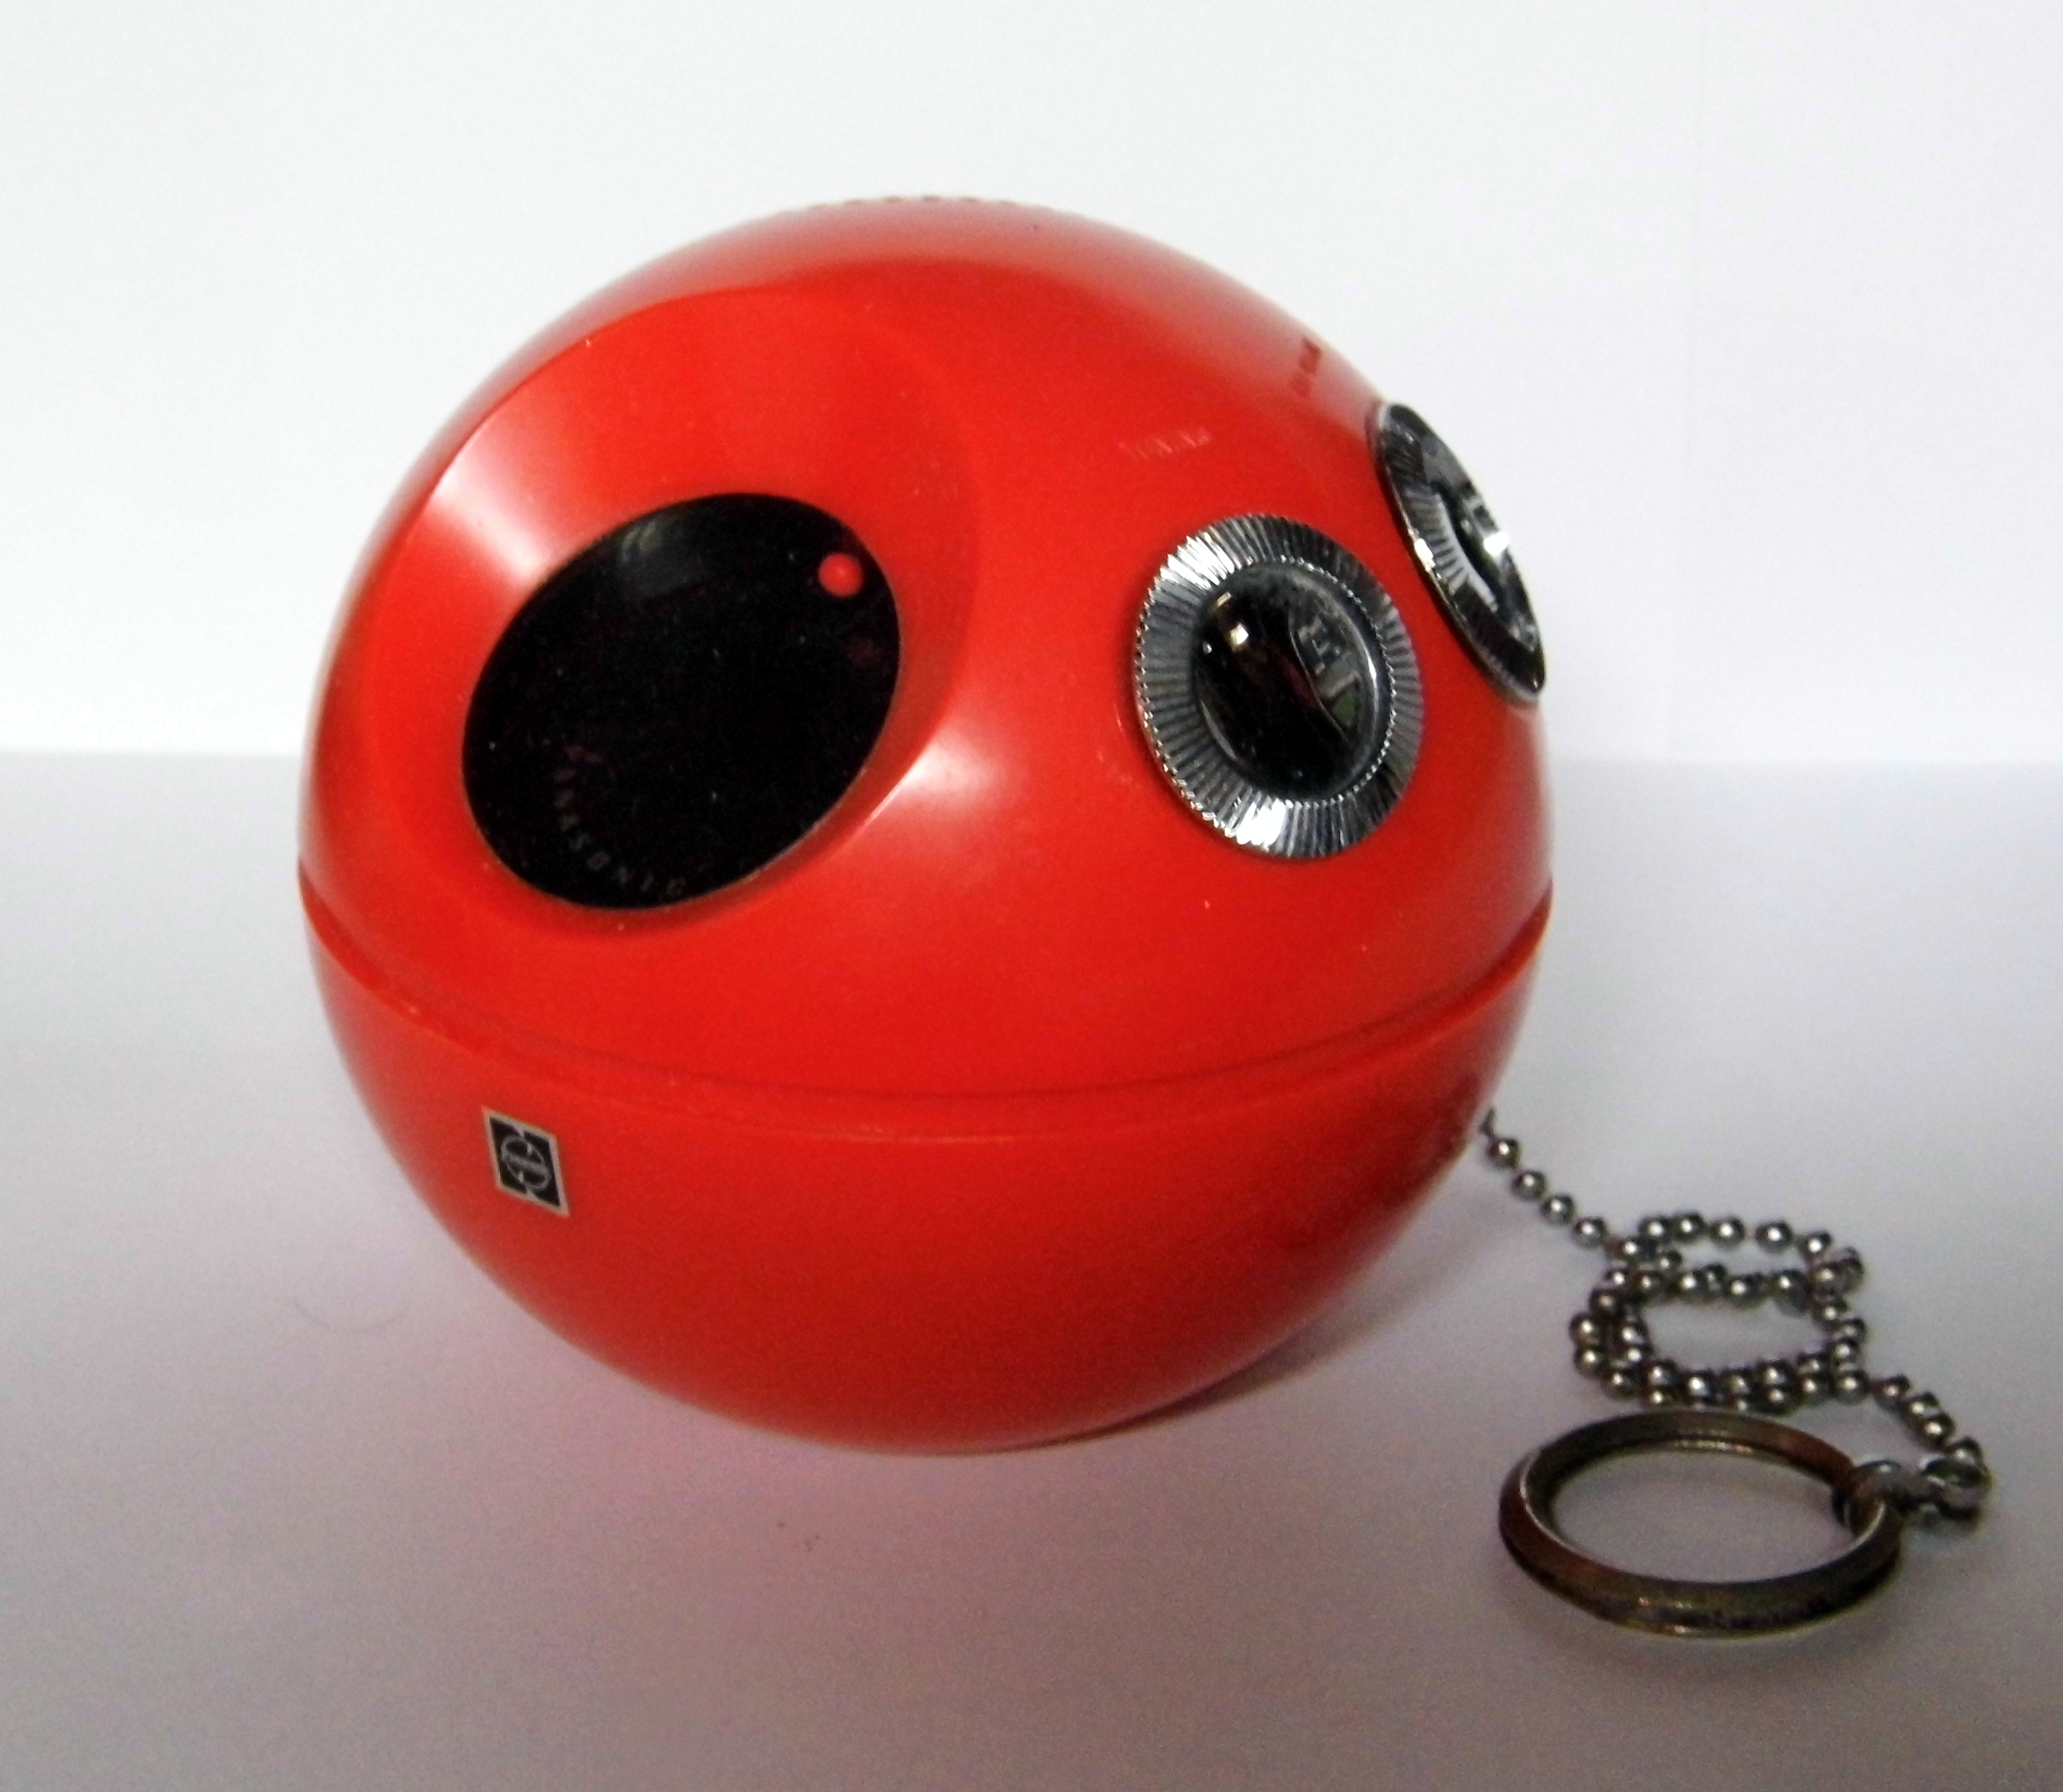 Vintage_Panasonic_Red-Orange_Panapet_70_Ball%27n_Chain_Radio%2C_Model_R-70%2C_4-3-8_Inches_in_Diameter%2C_Made_in_Japan_%289791956884%29.jpg